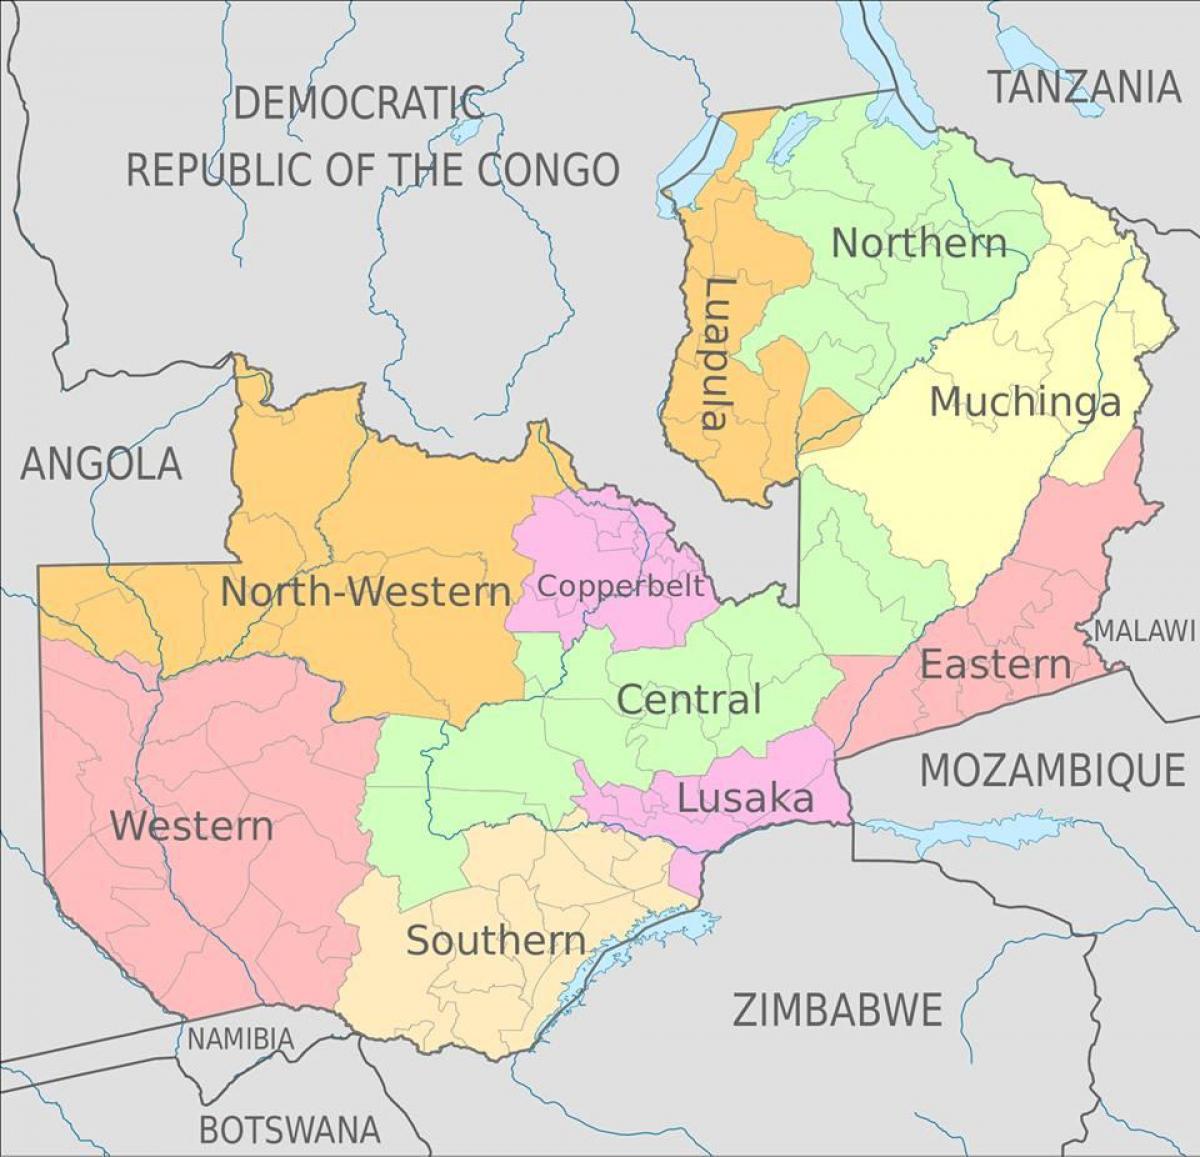 Kwacha mapa com as províncias